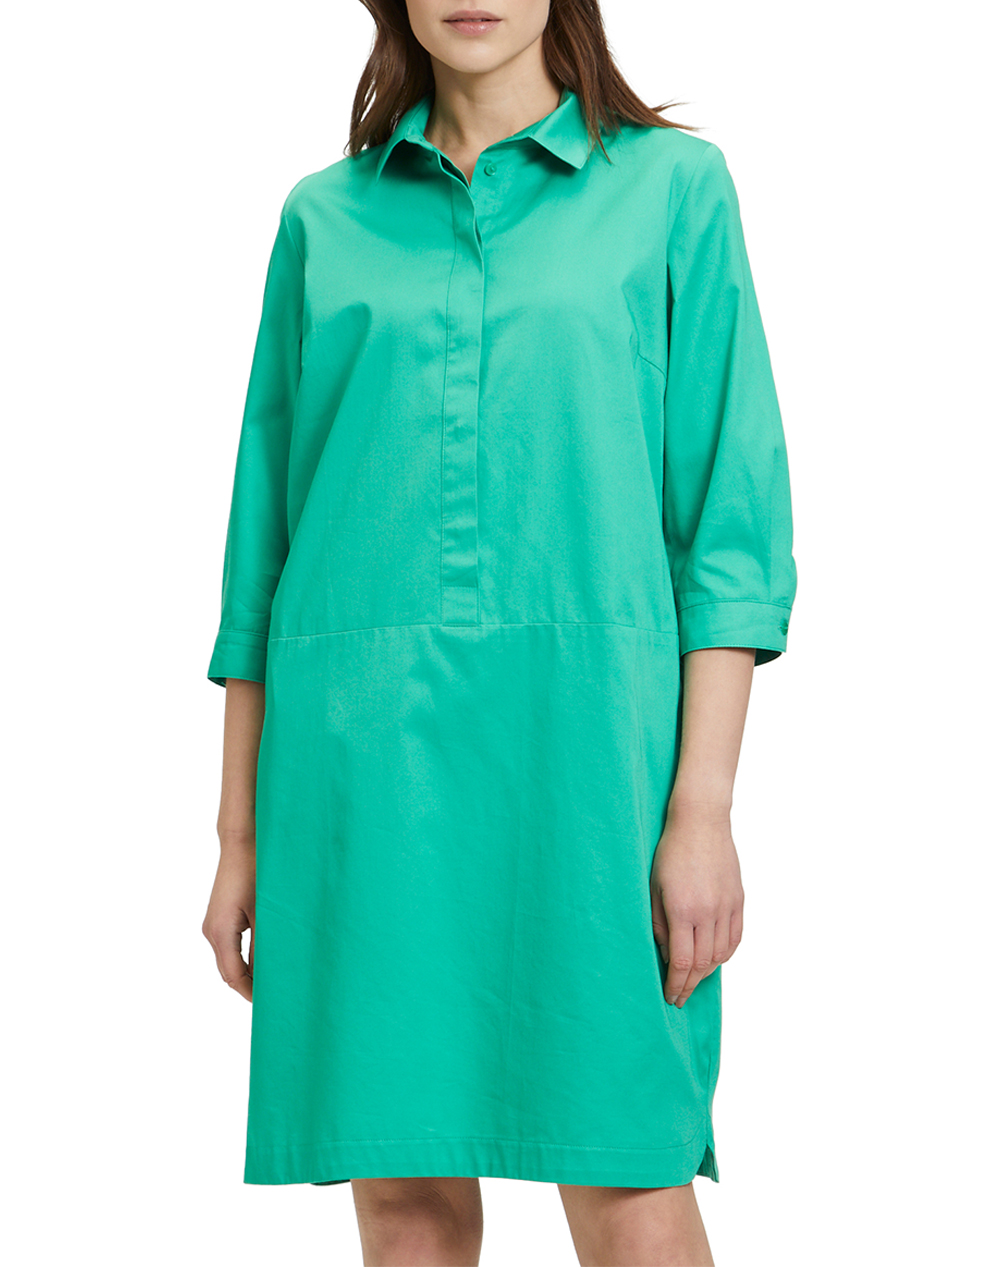 BETTY BARCLAY DRESS 1526/2522-5266 Green